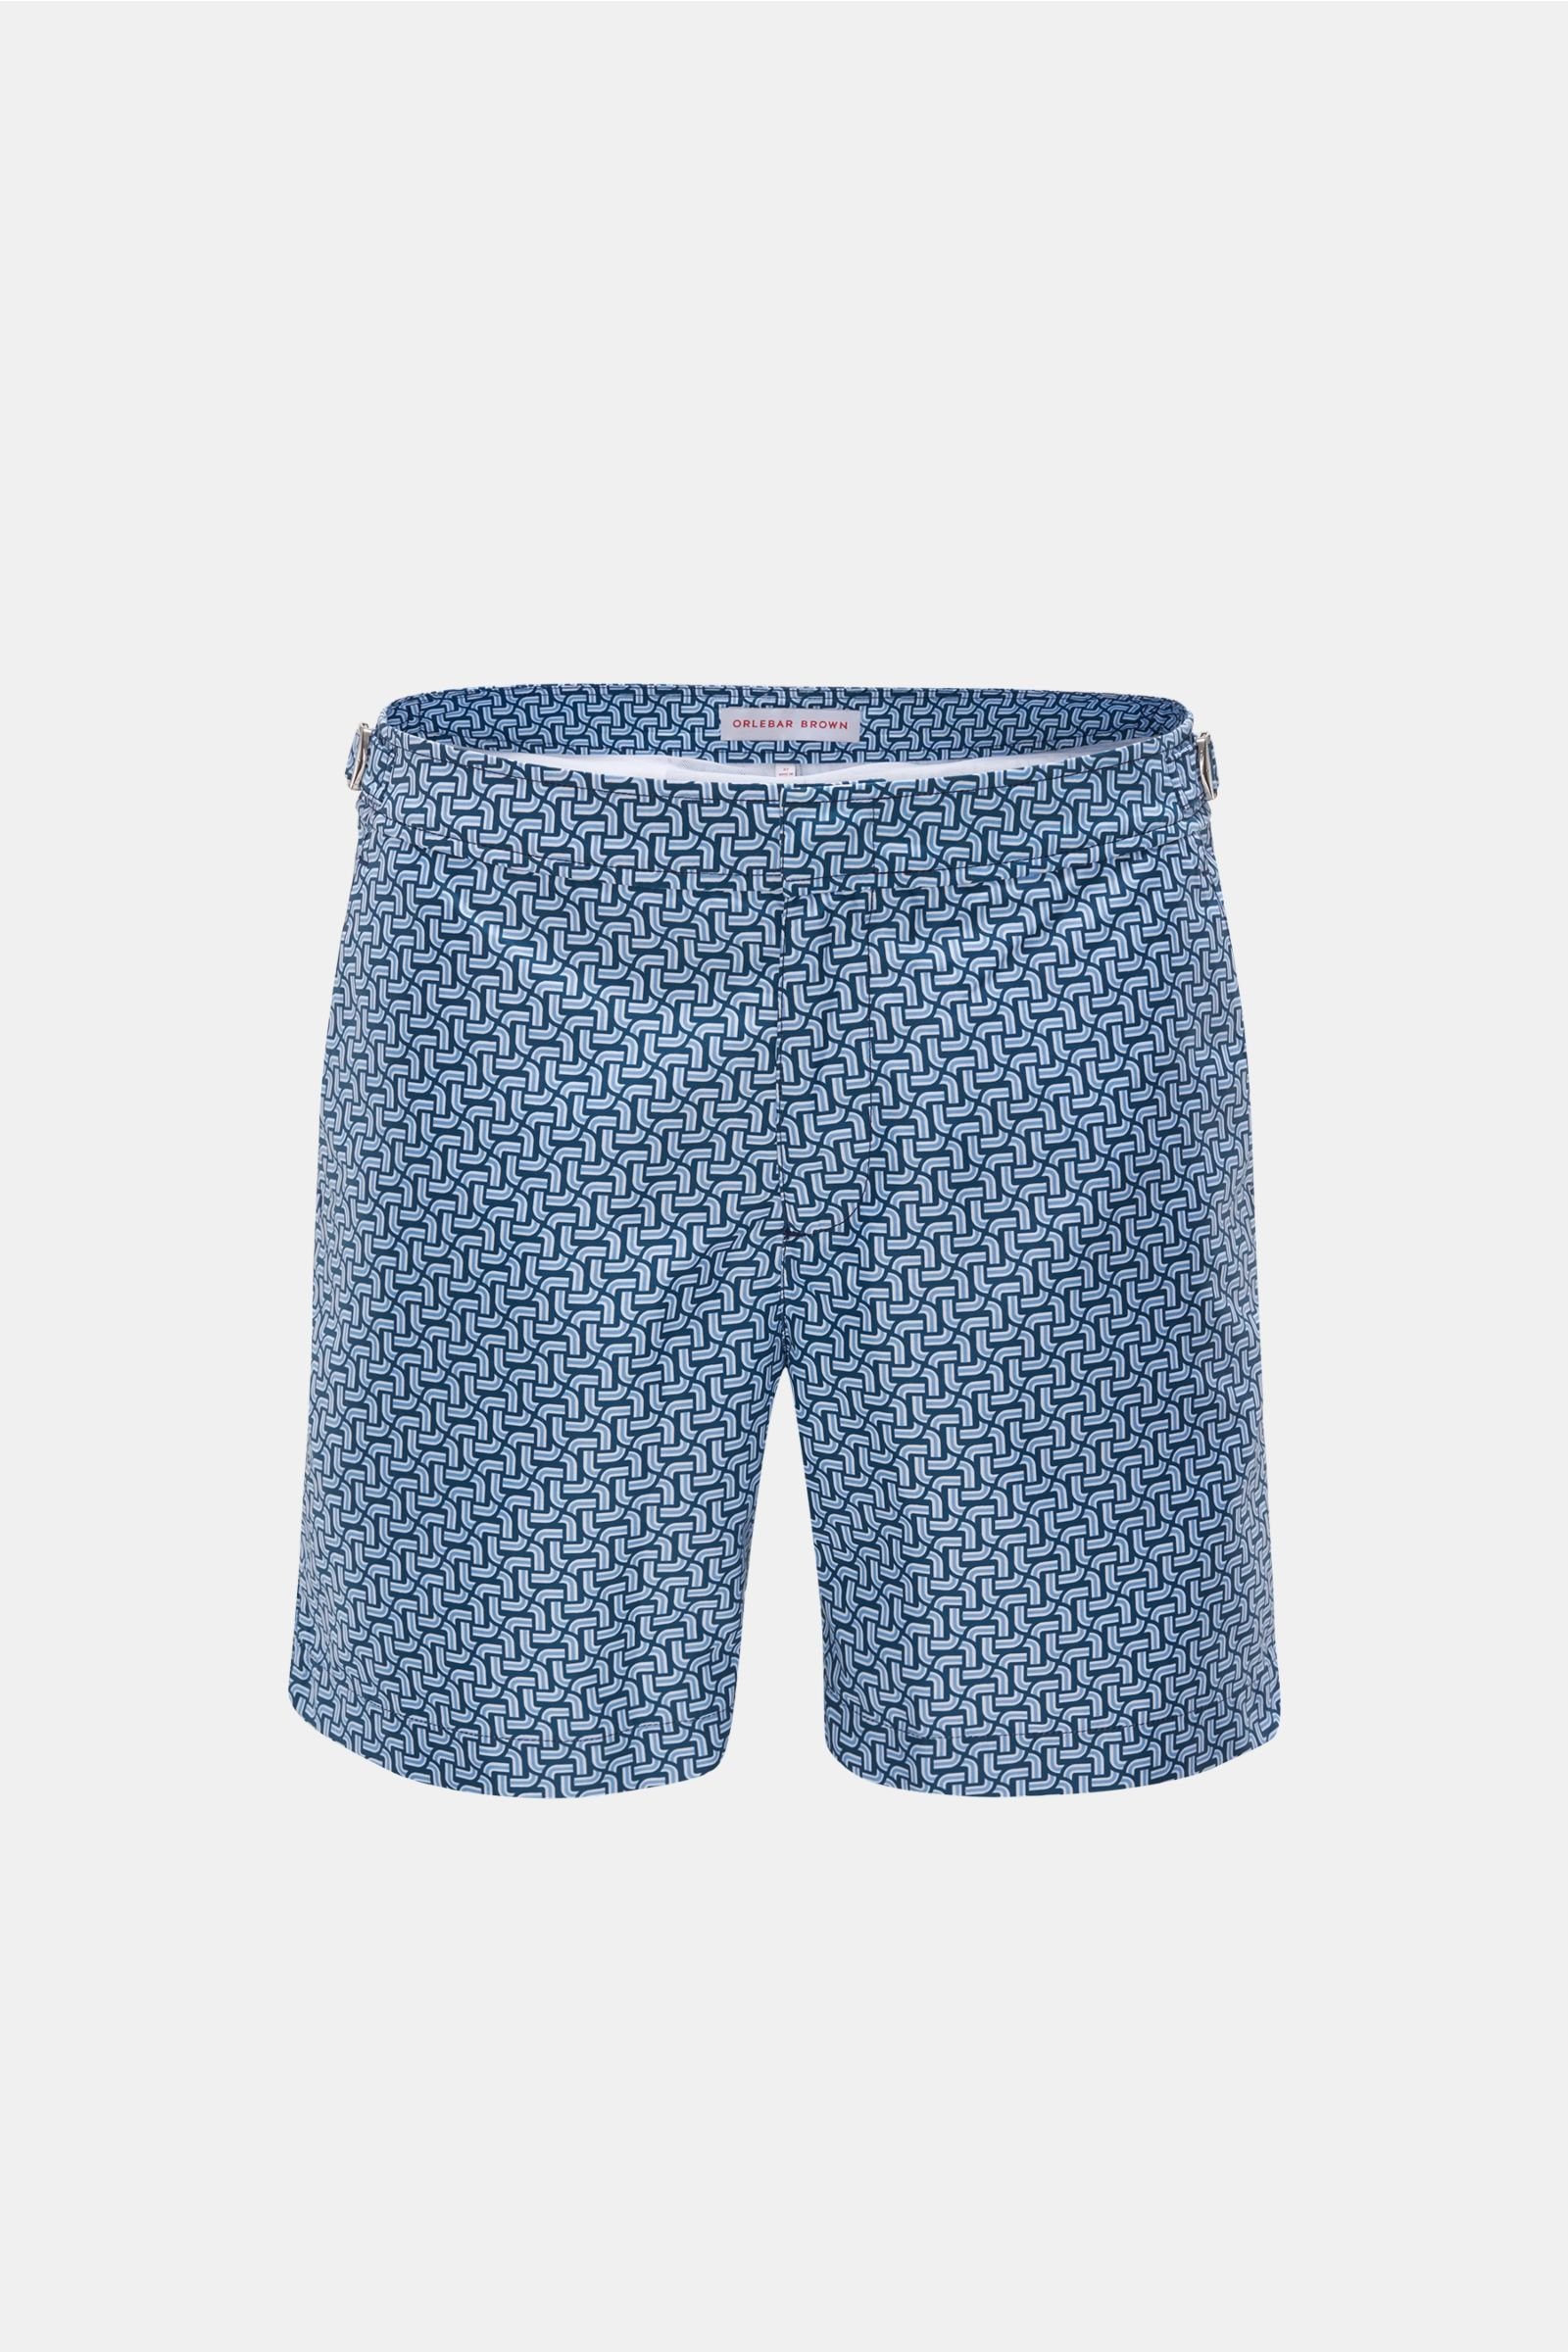 Swim shorts 'Bulldog' light blue/teal patterned